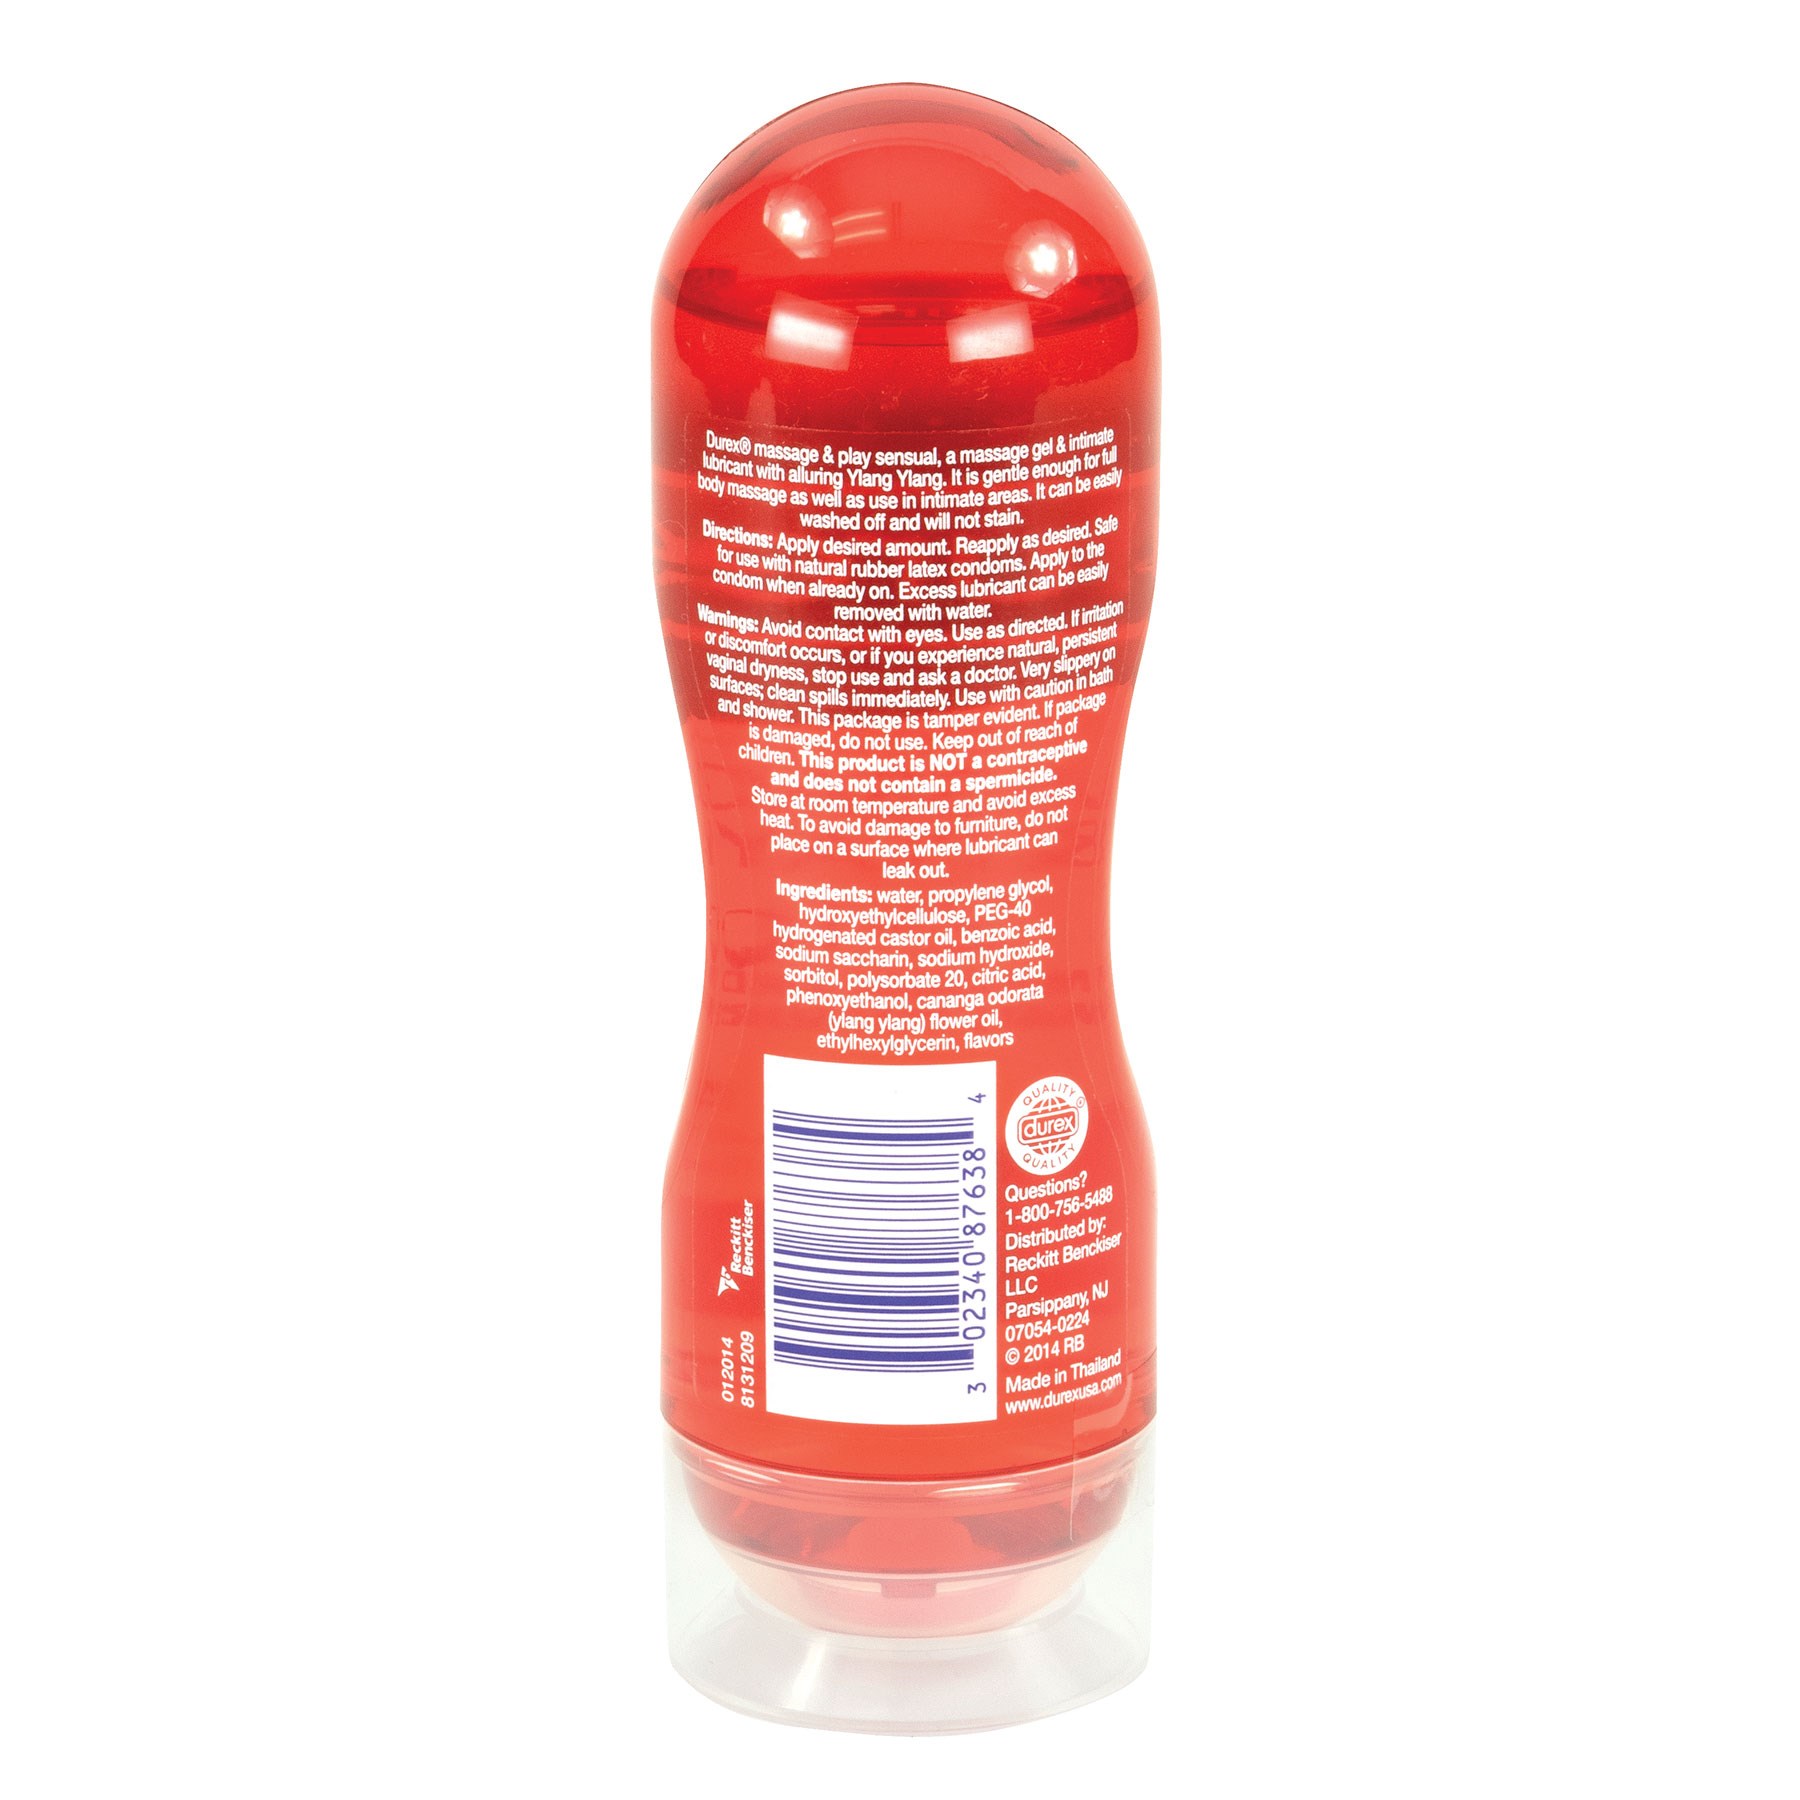 Durex Sensual 2-In-1 Lubricant back of bottle